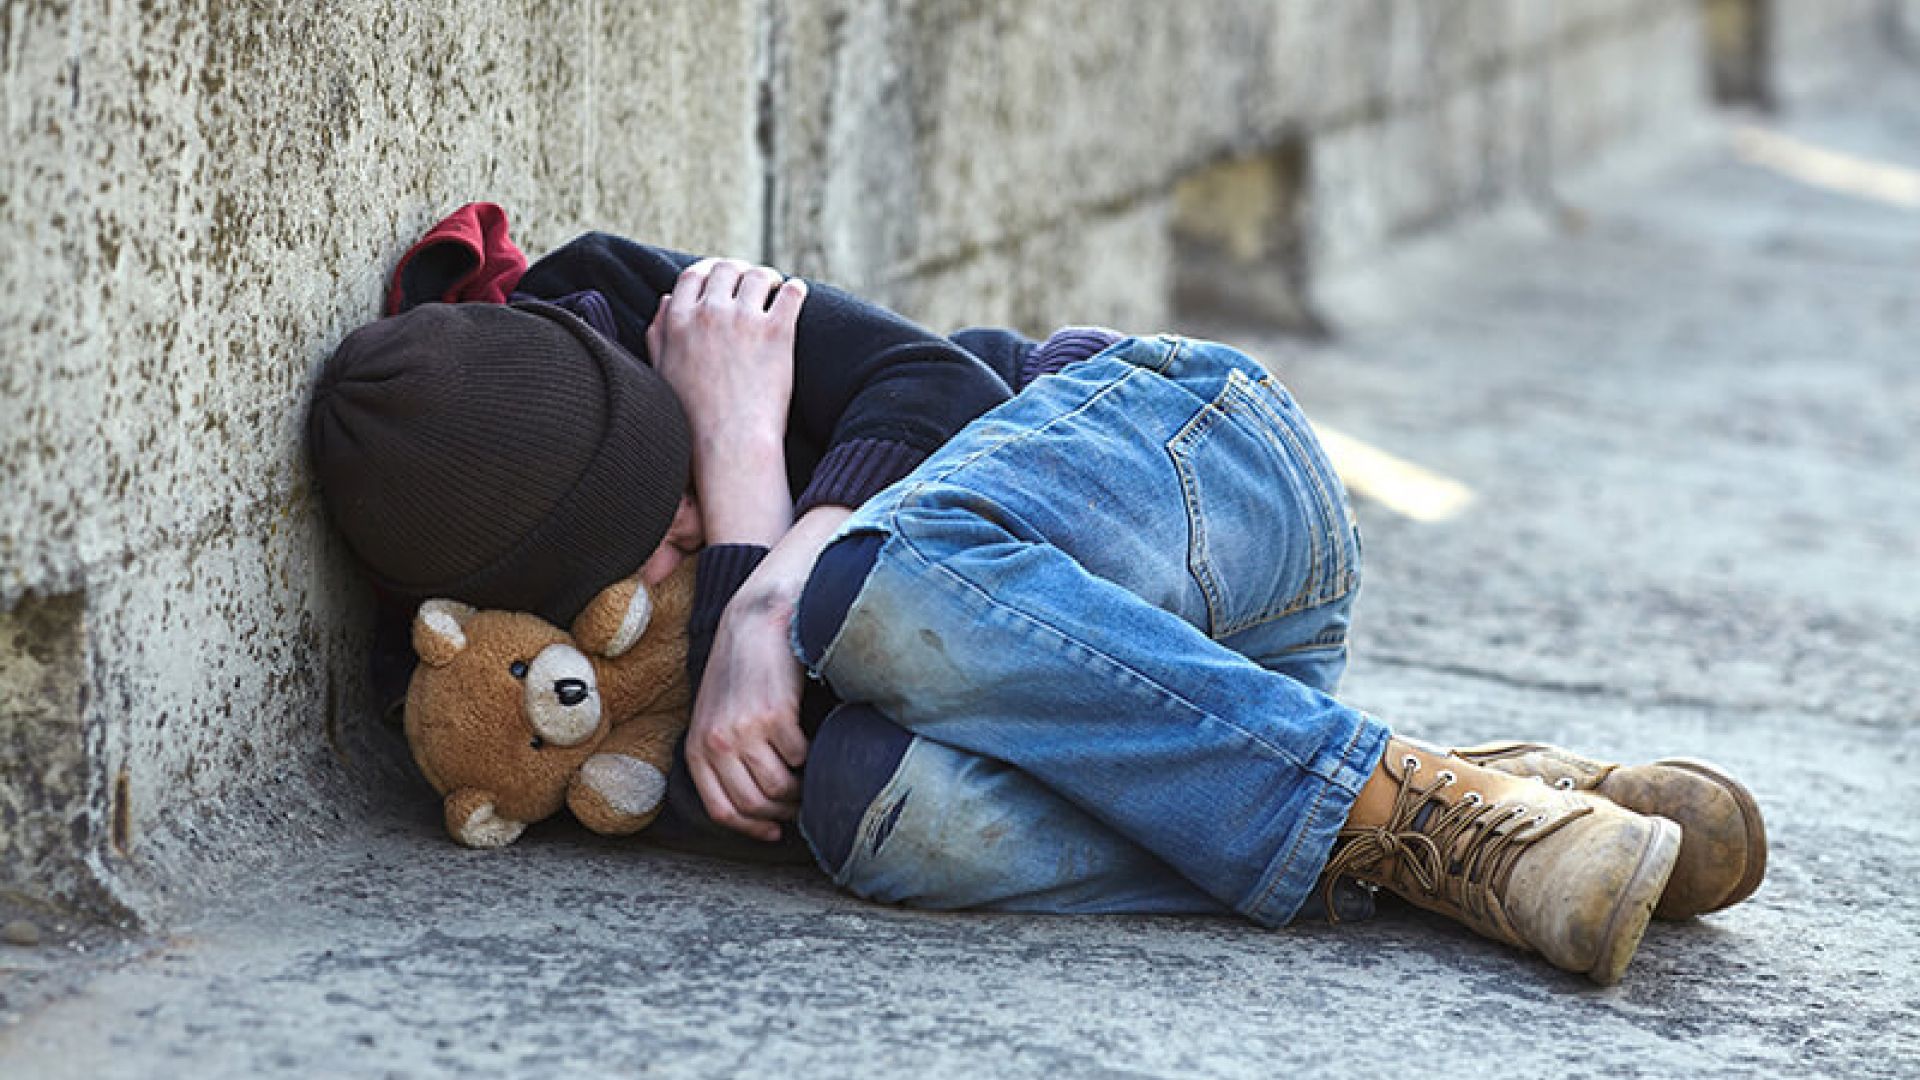 Child lying in street with teddy bear